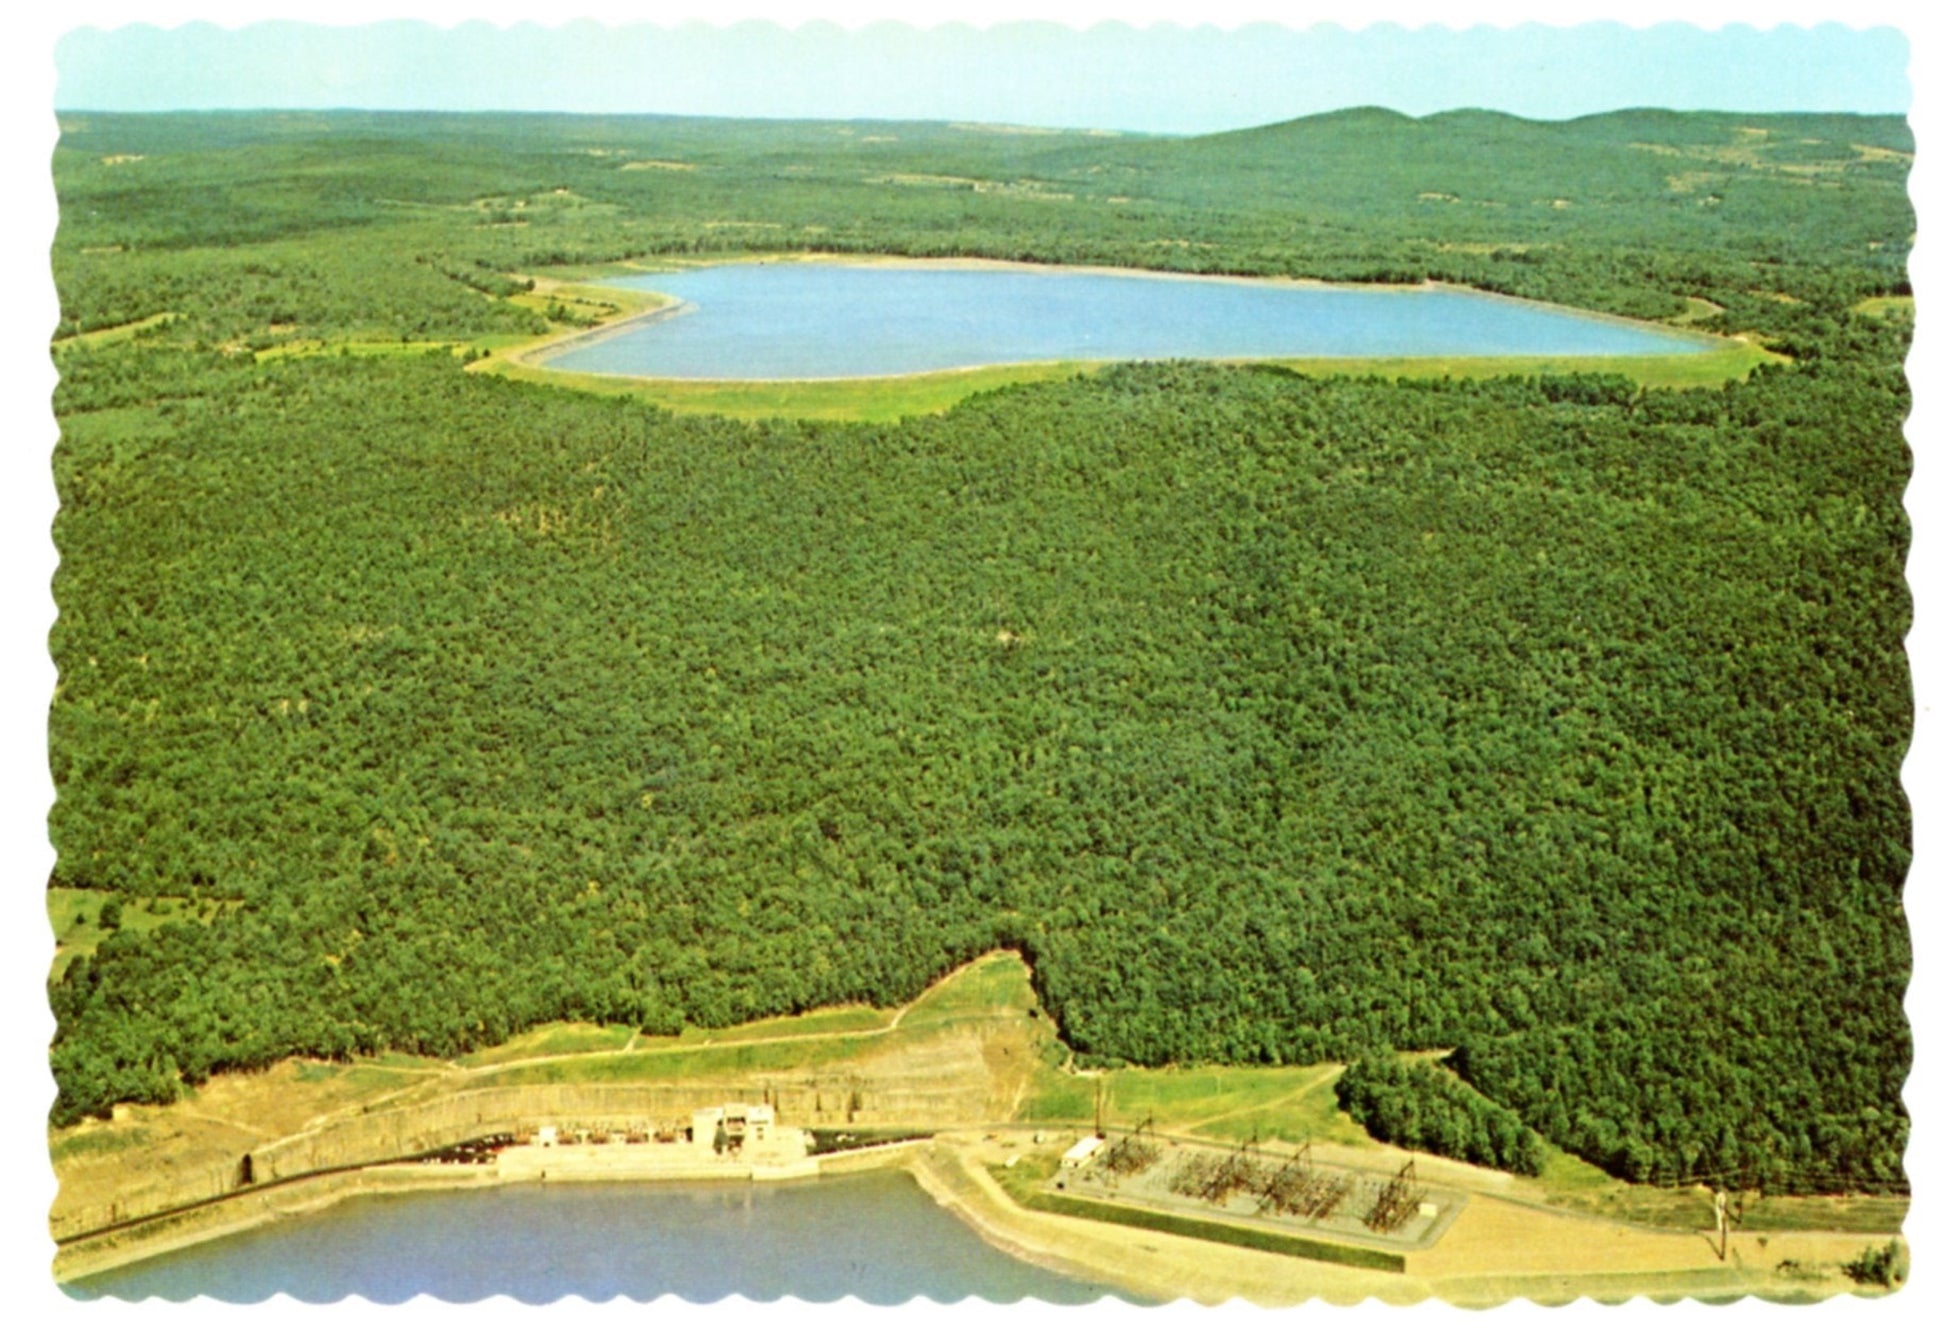 Blenheim-Gilboa Pumped Storage Project GILBOA NEW YORK Aerial View Vintage Large Postcard